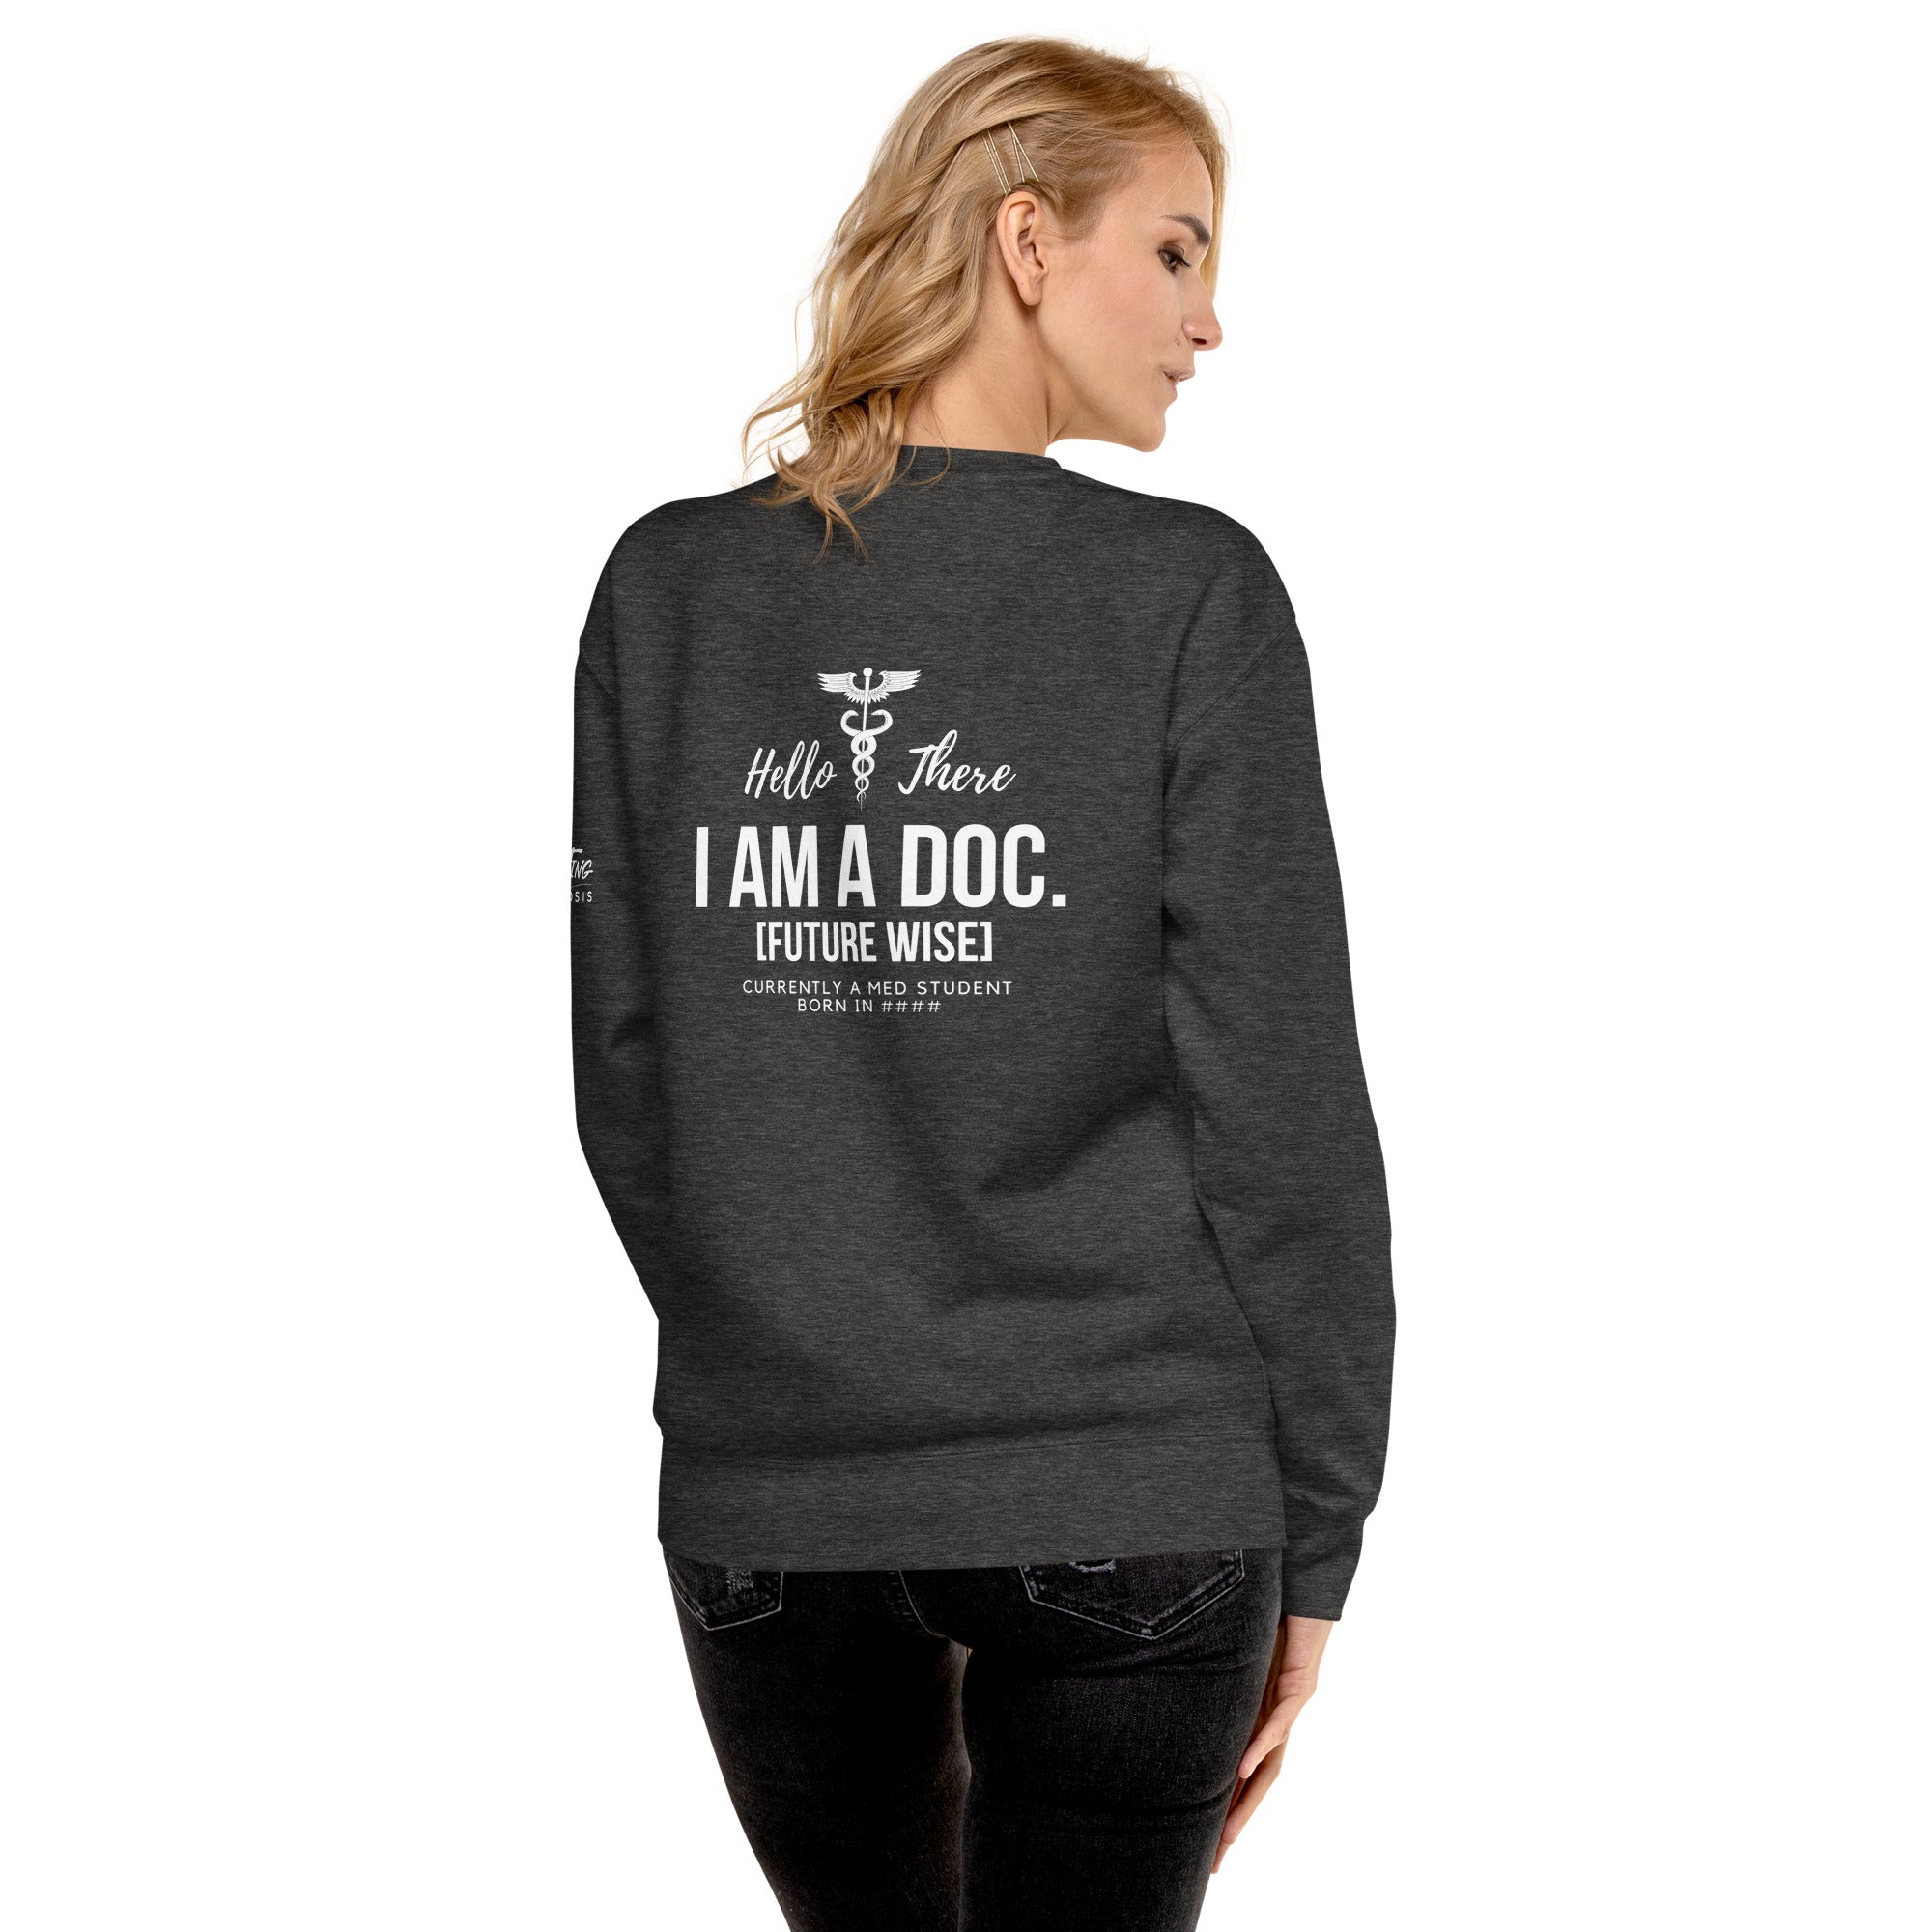 I AM A DOC! Premium Unisex Sweatshirt